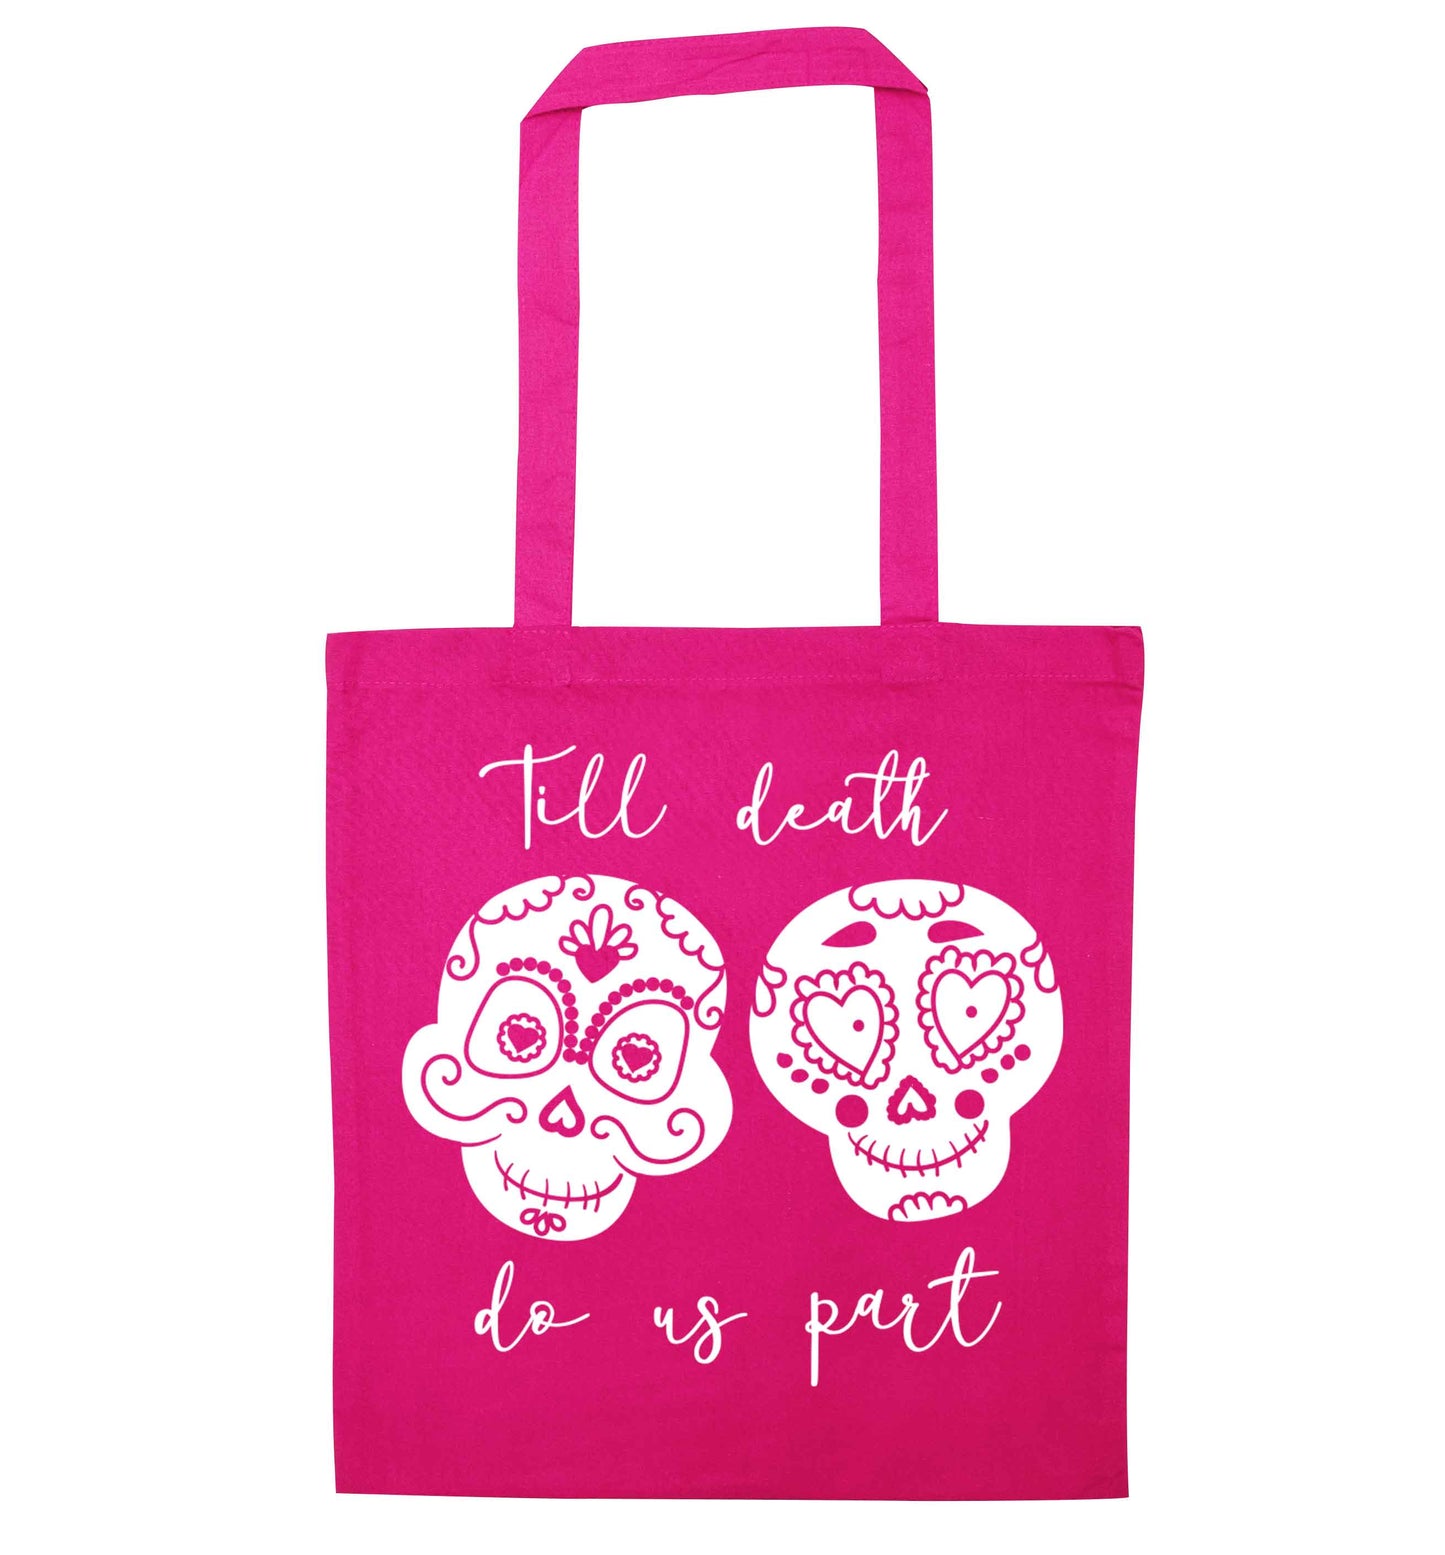 Till death do us part sugar skulls pink tote bag